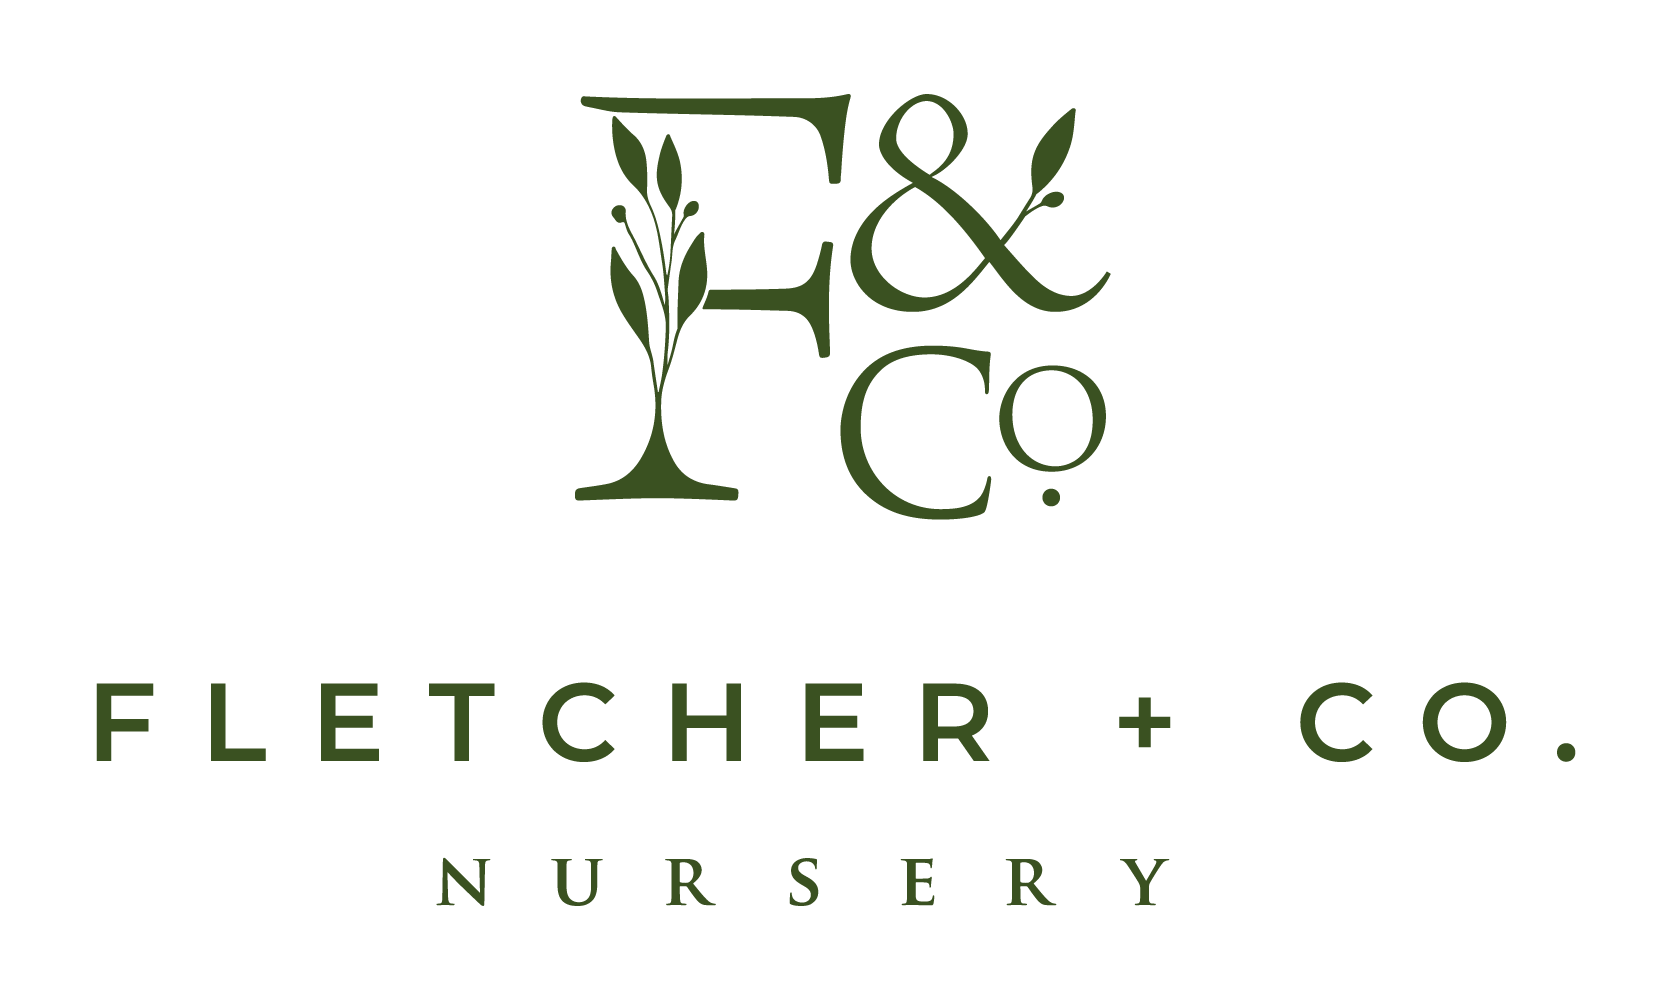 Fletcher & Co. Nursery